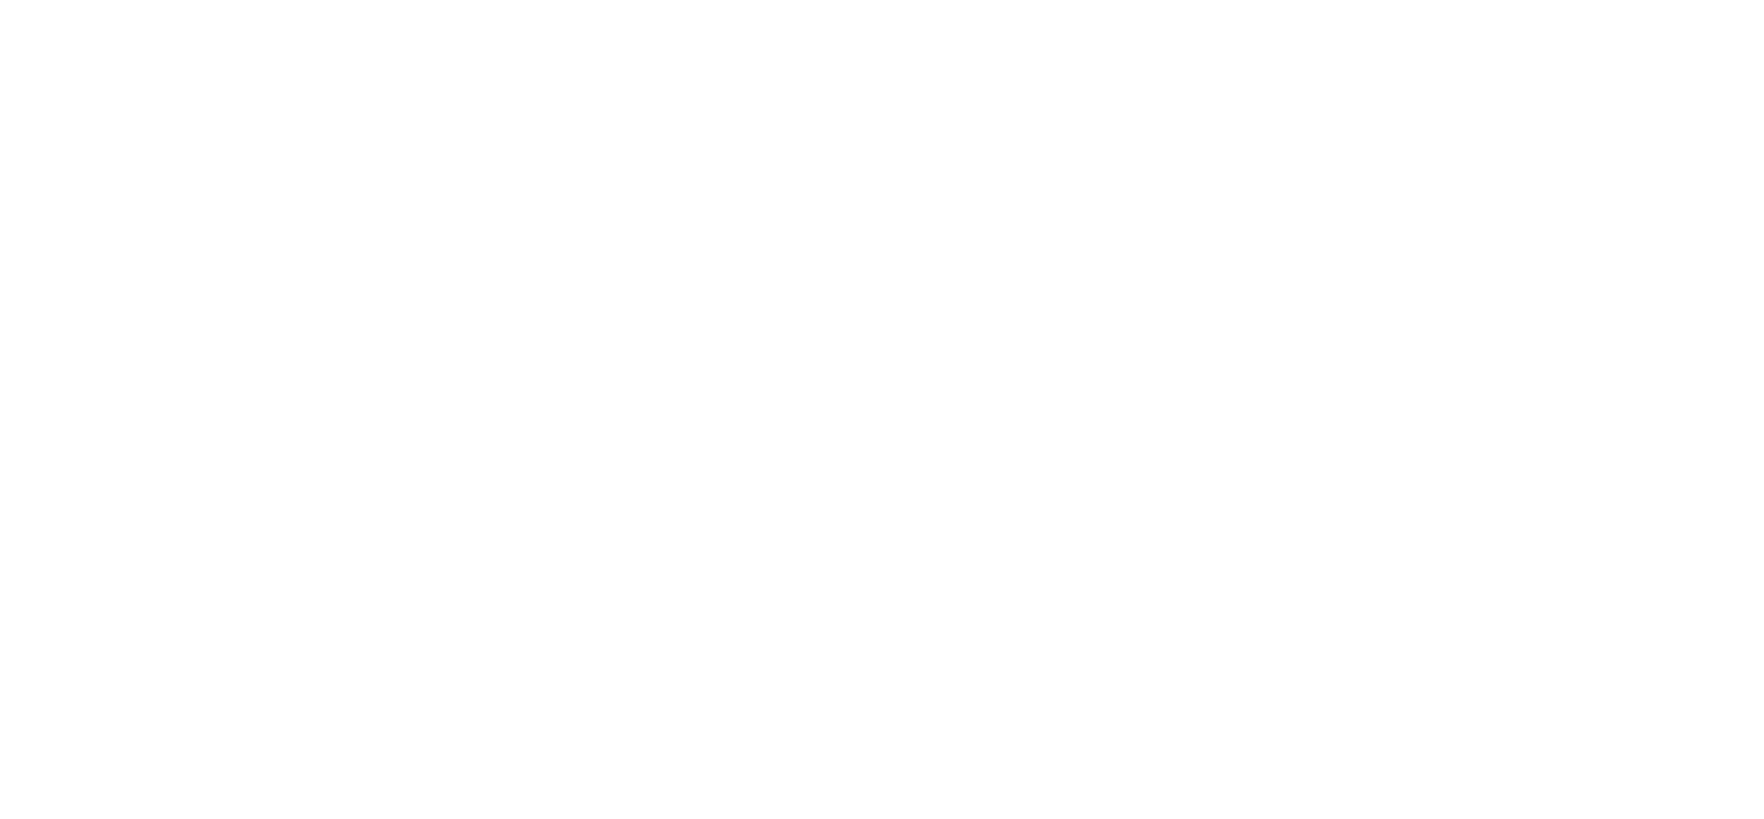 Golden Yacht Charters